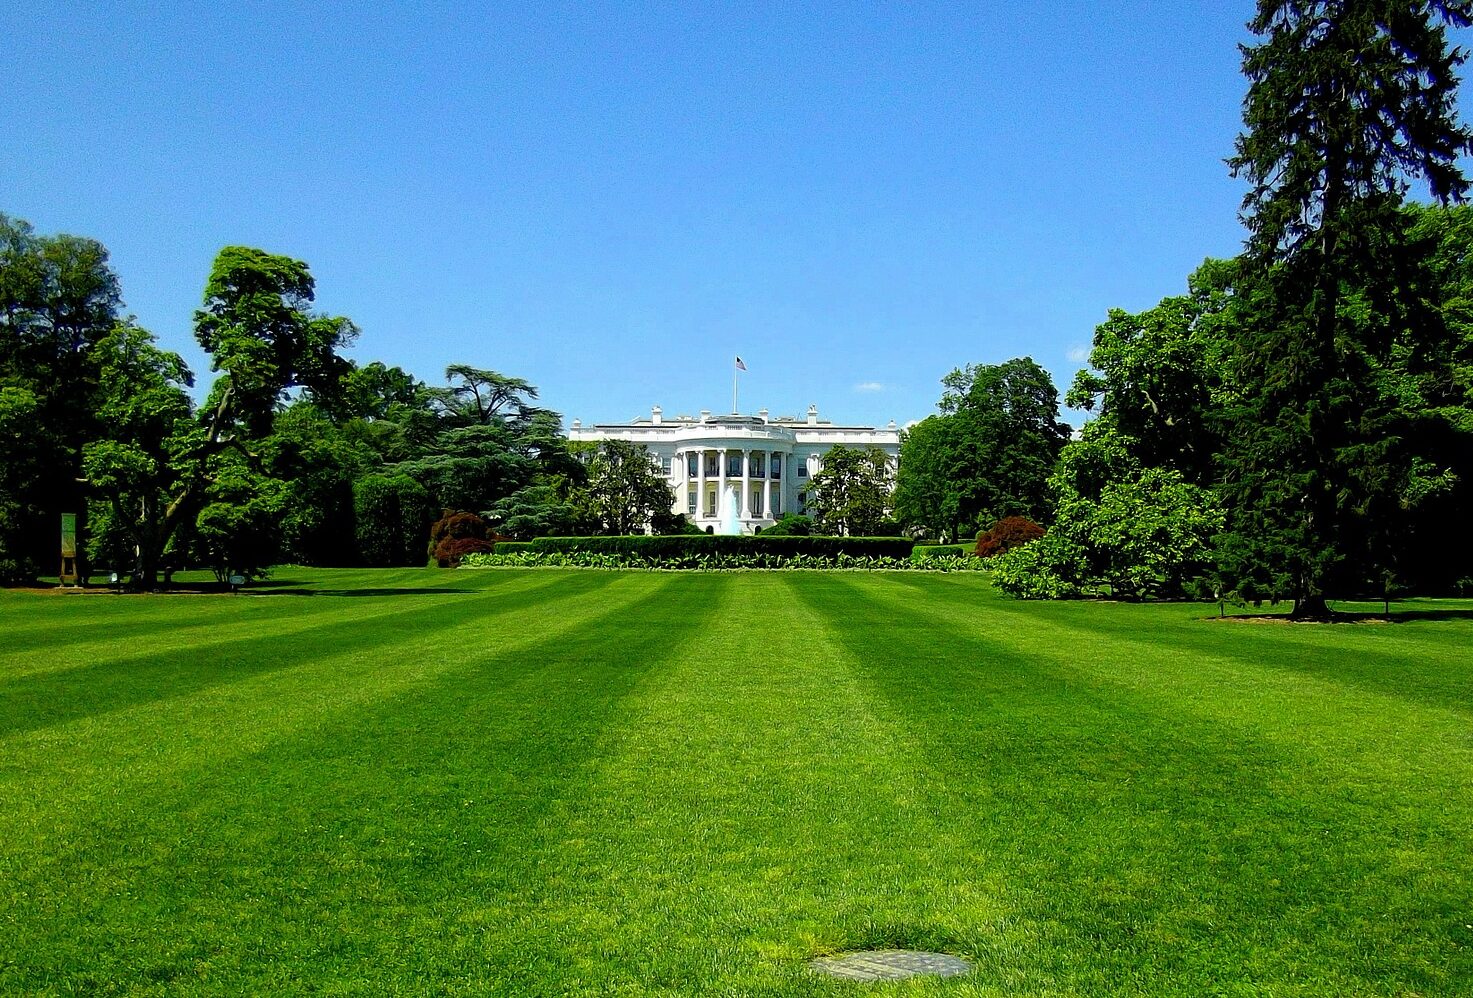 Exterior of White House